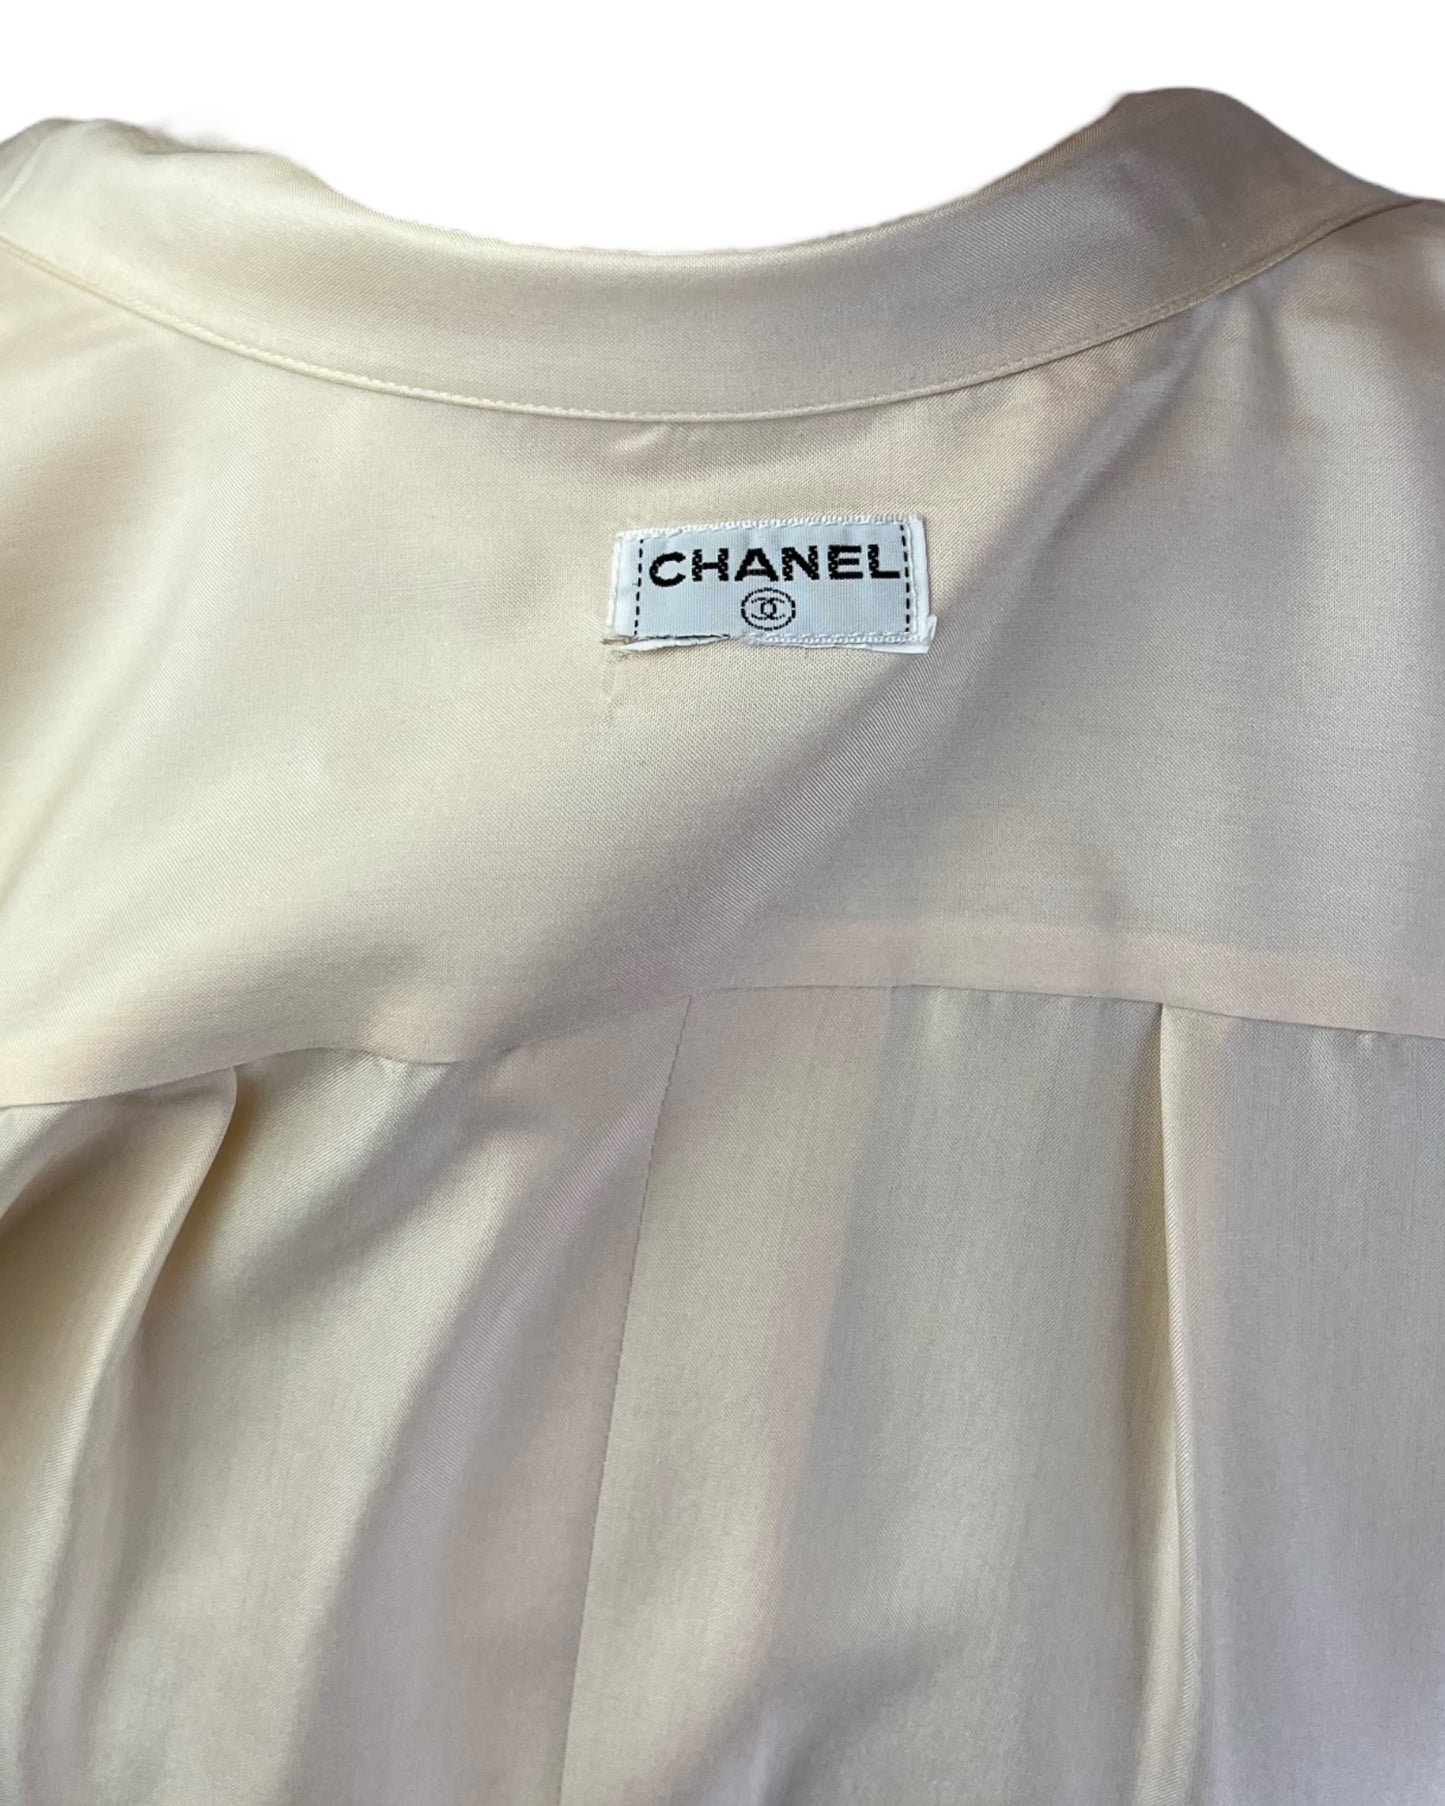 1980s Cream Chanel Top